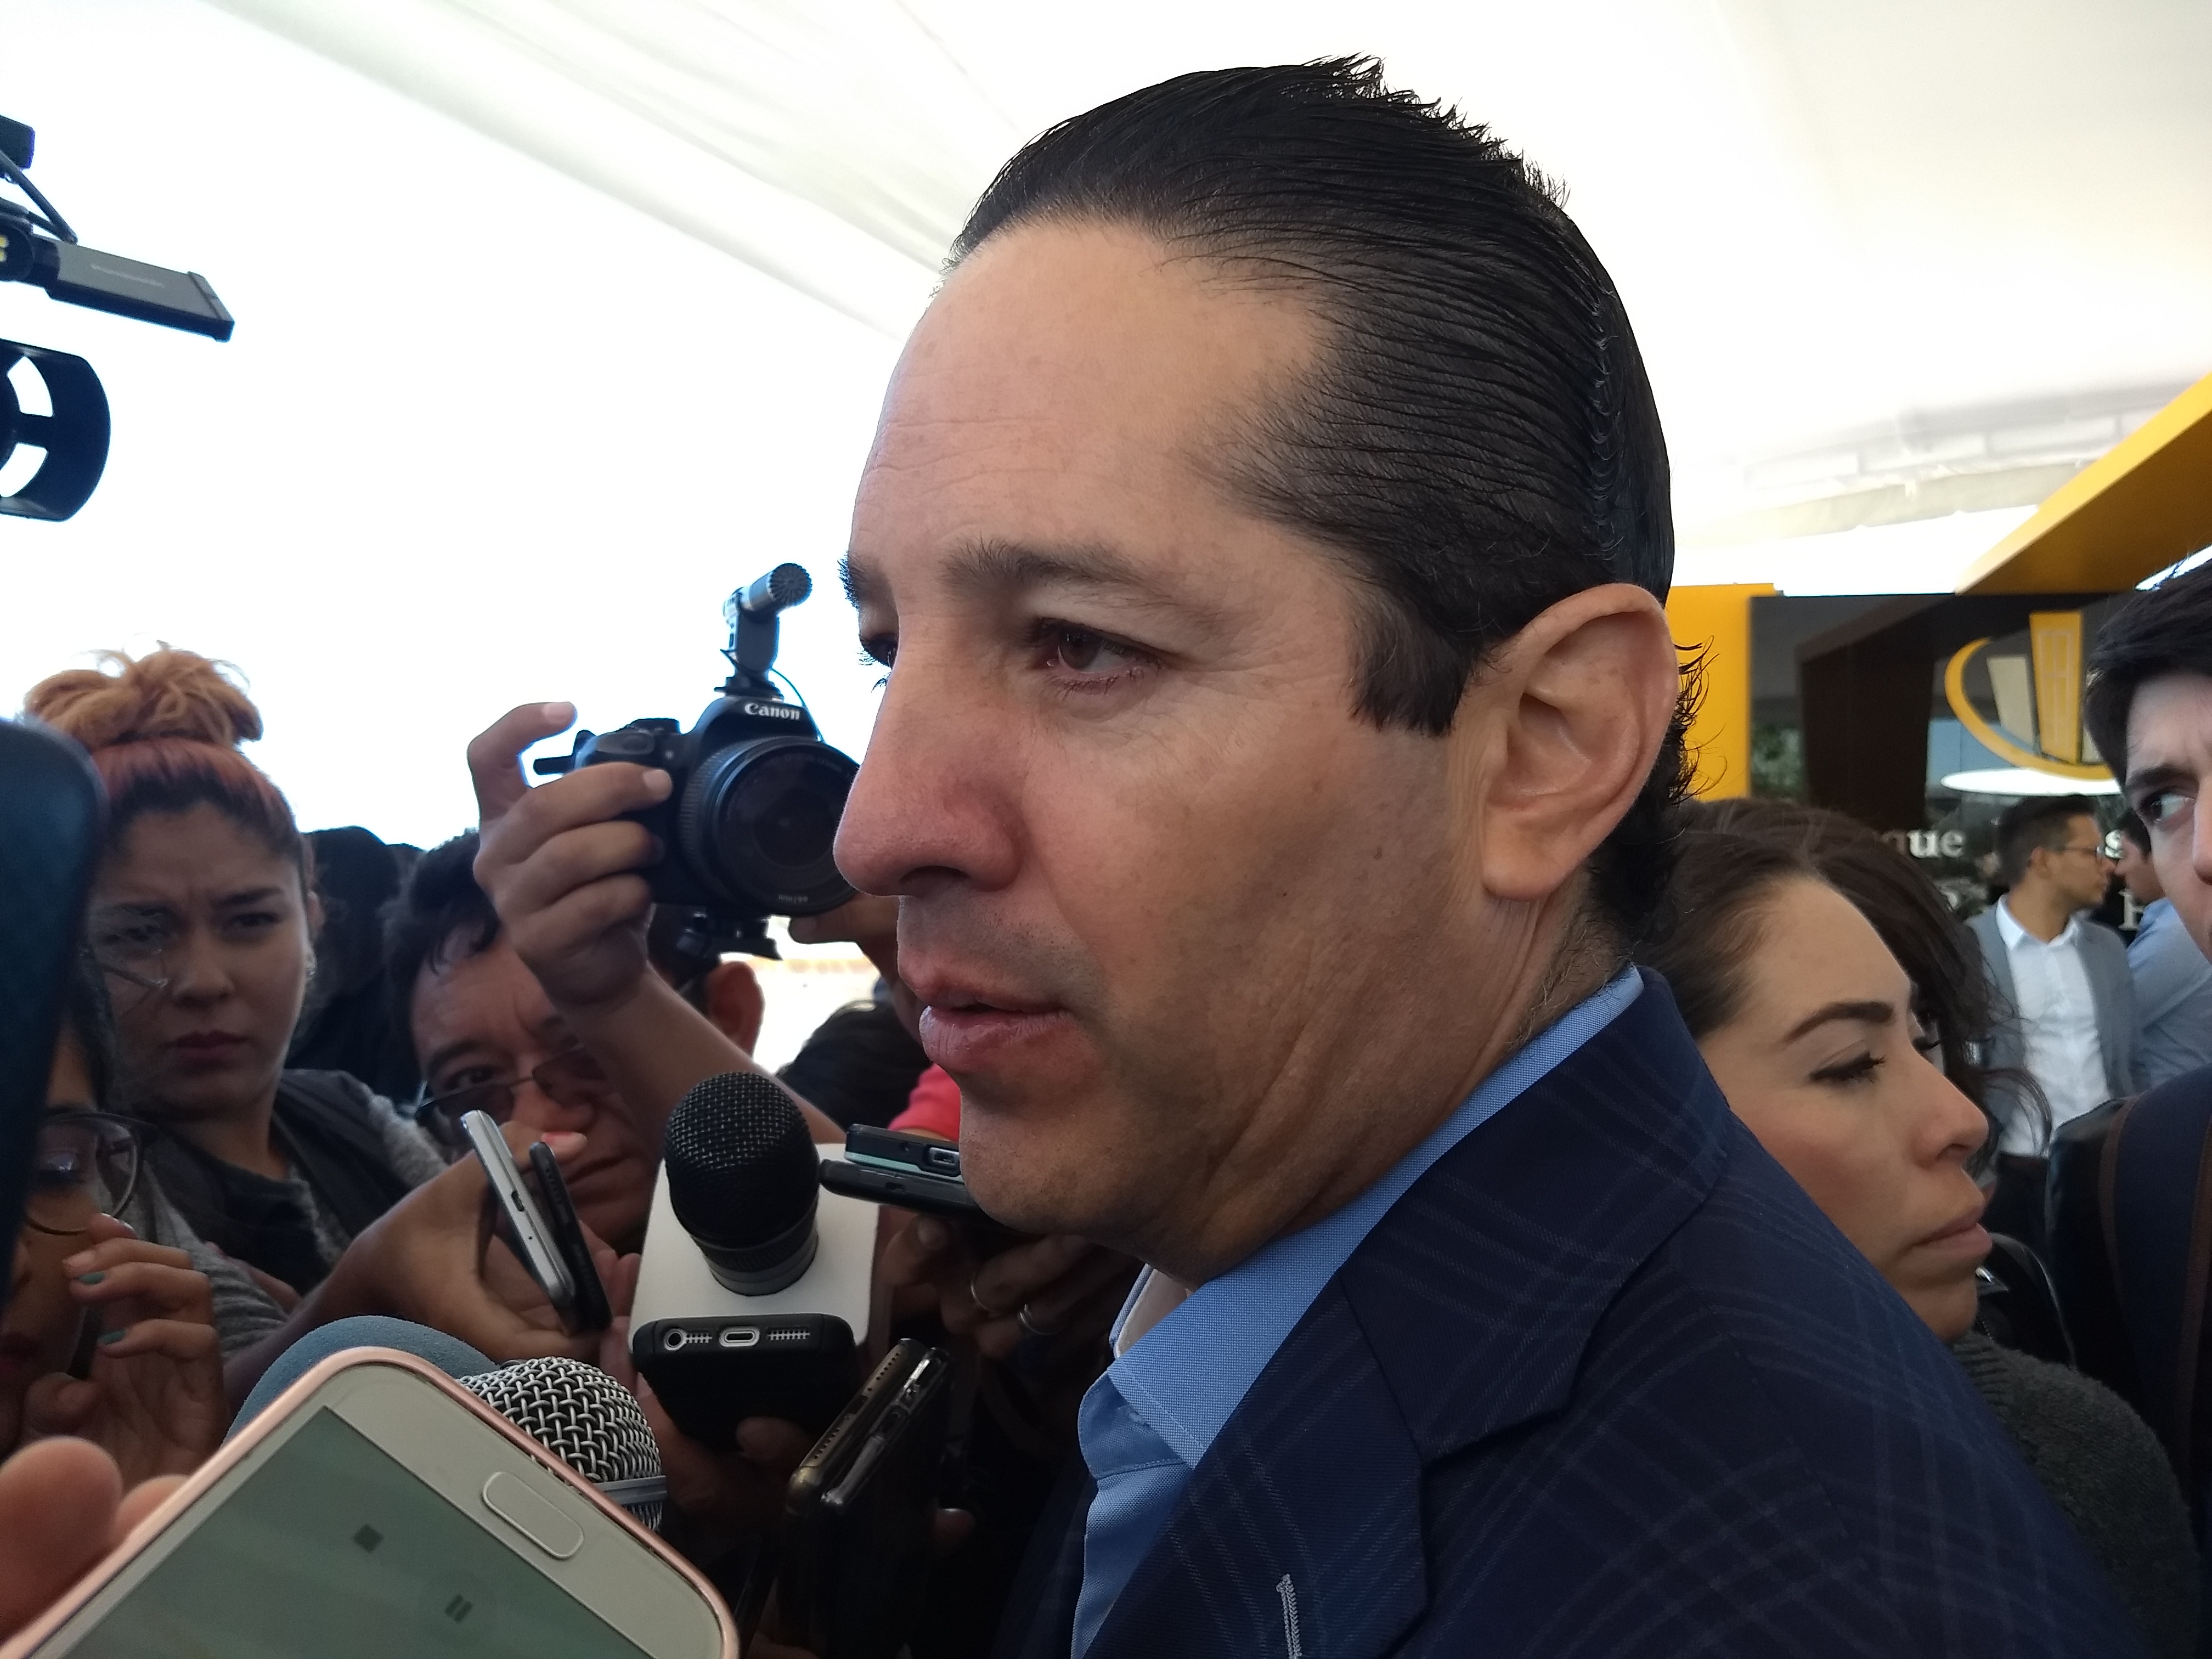  “Si municipio no quiere pagar indemnización por socavón, estado lo hará”: Pancho Domínguez